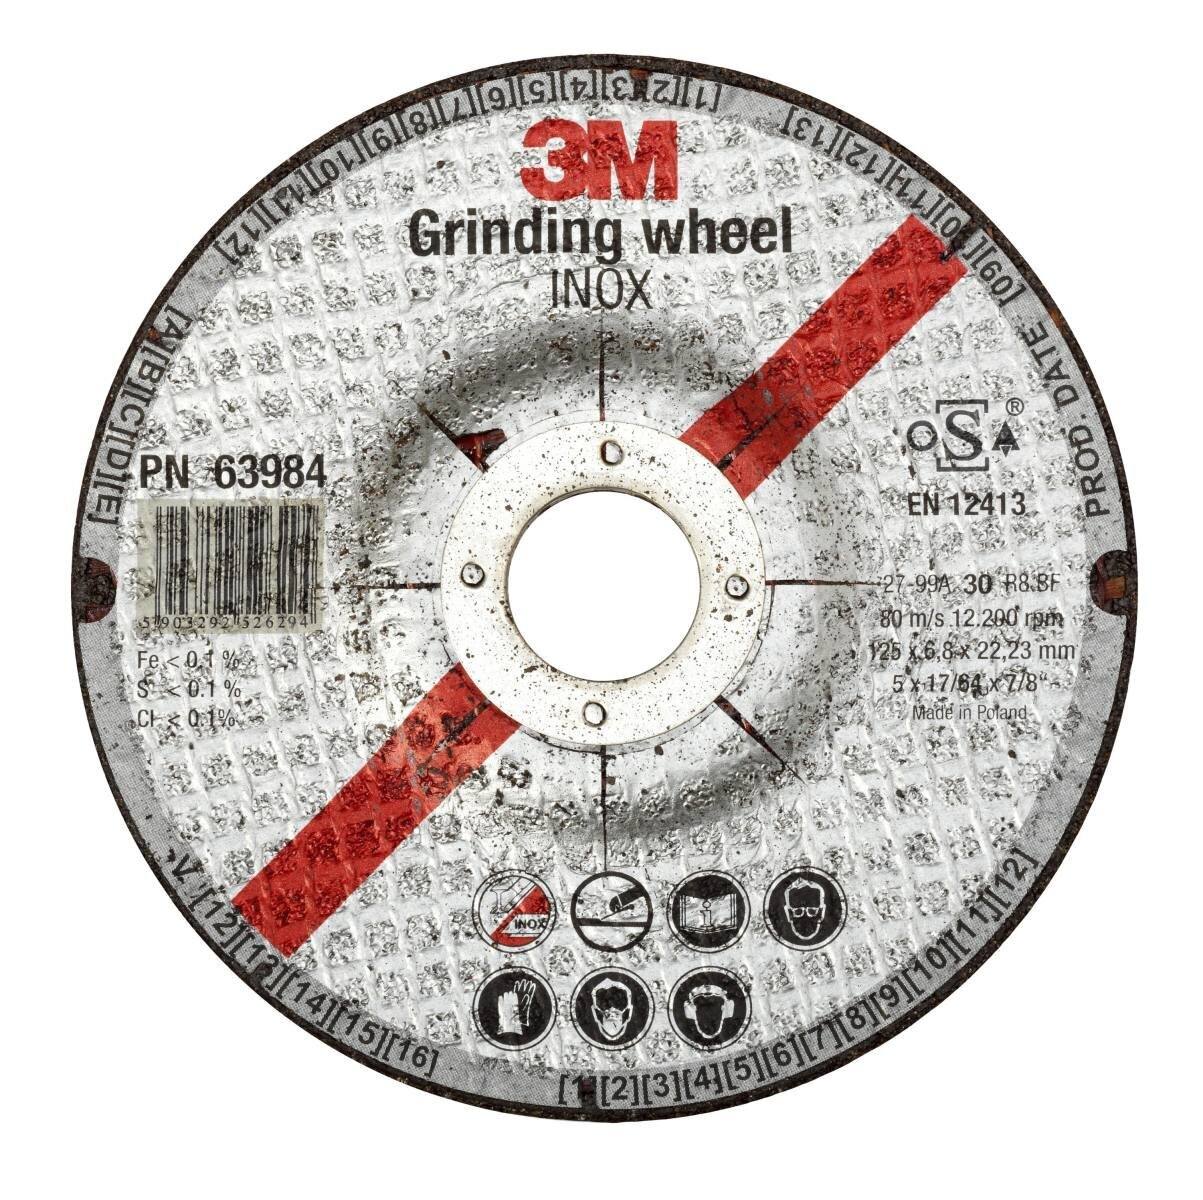 3M grinding disc INOX, 230 mm, 6.8 mm, 22.23 mm, P30, type 27 #63986